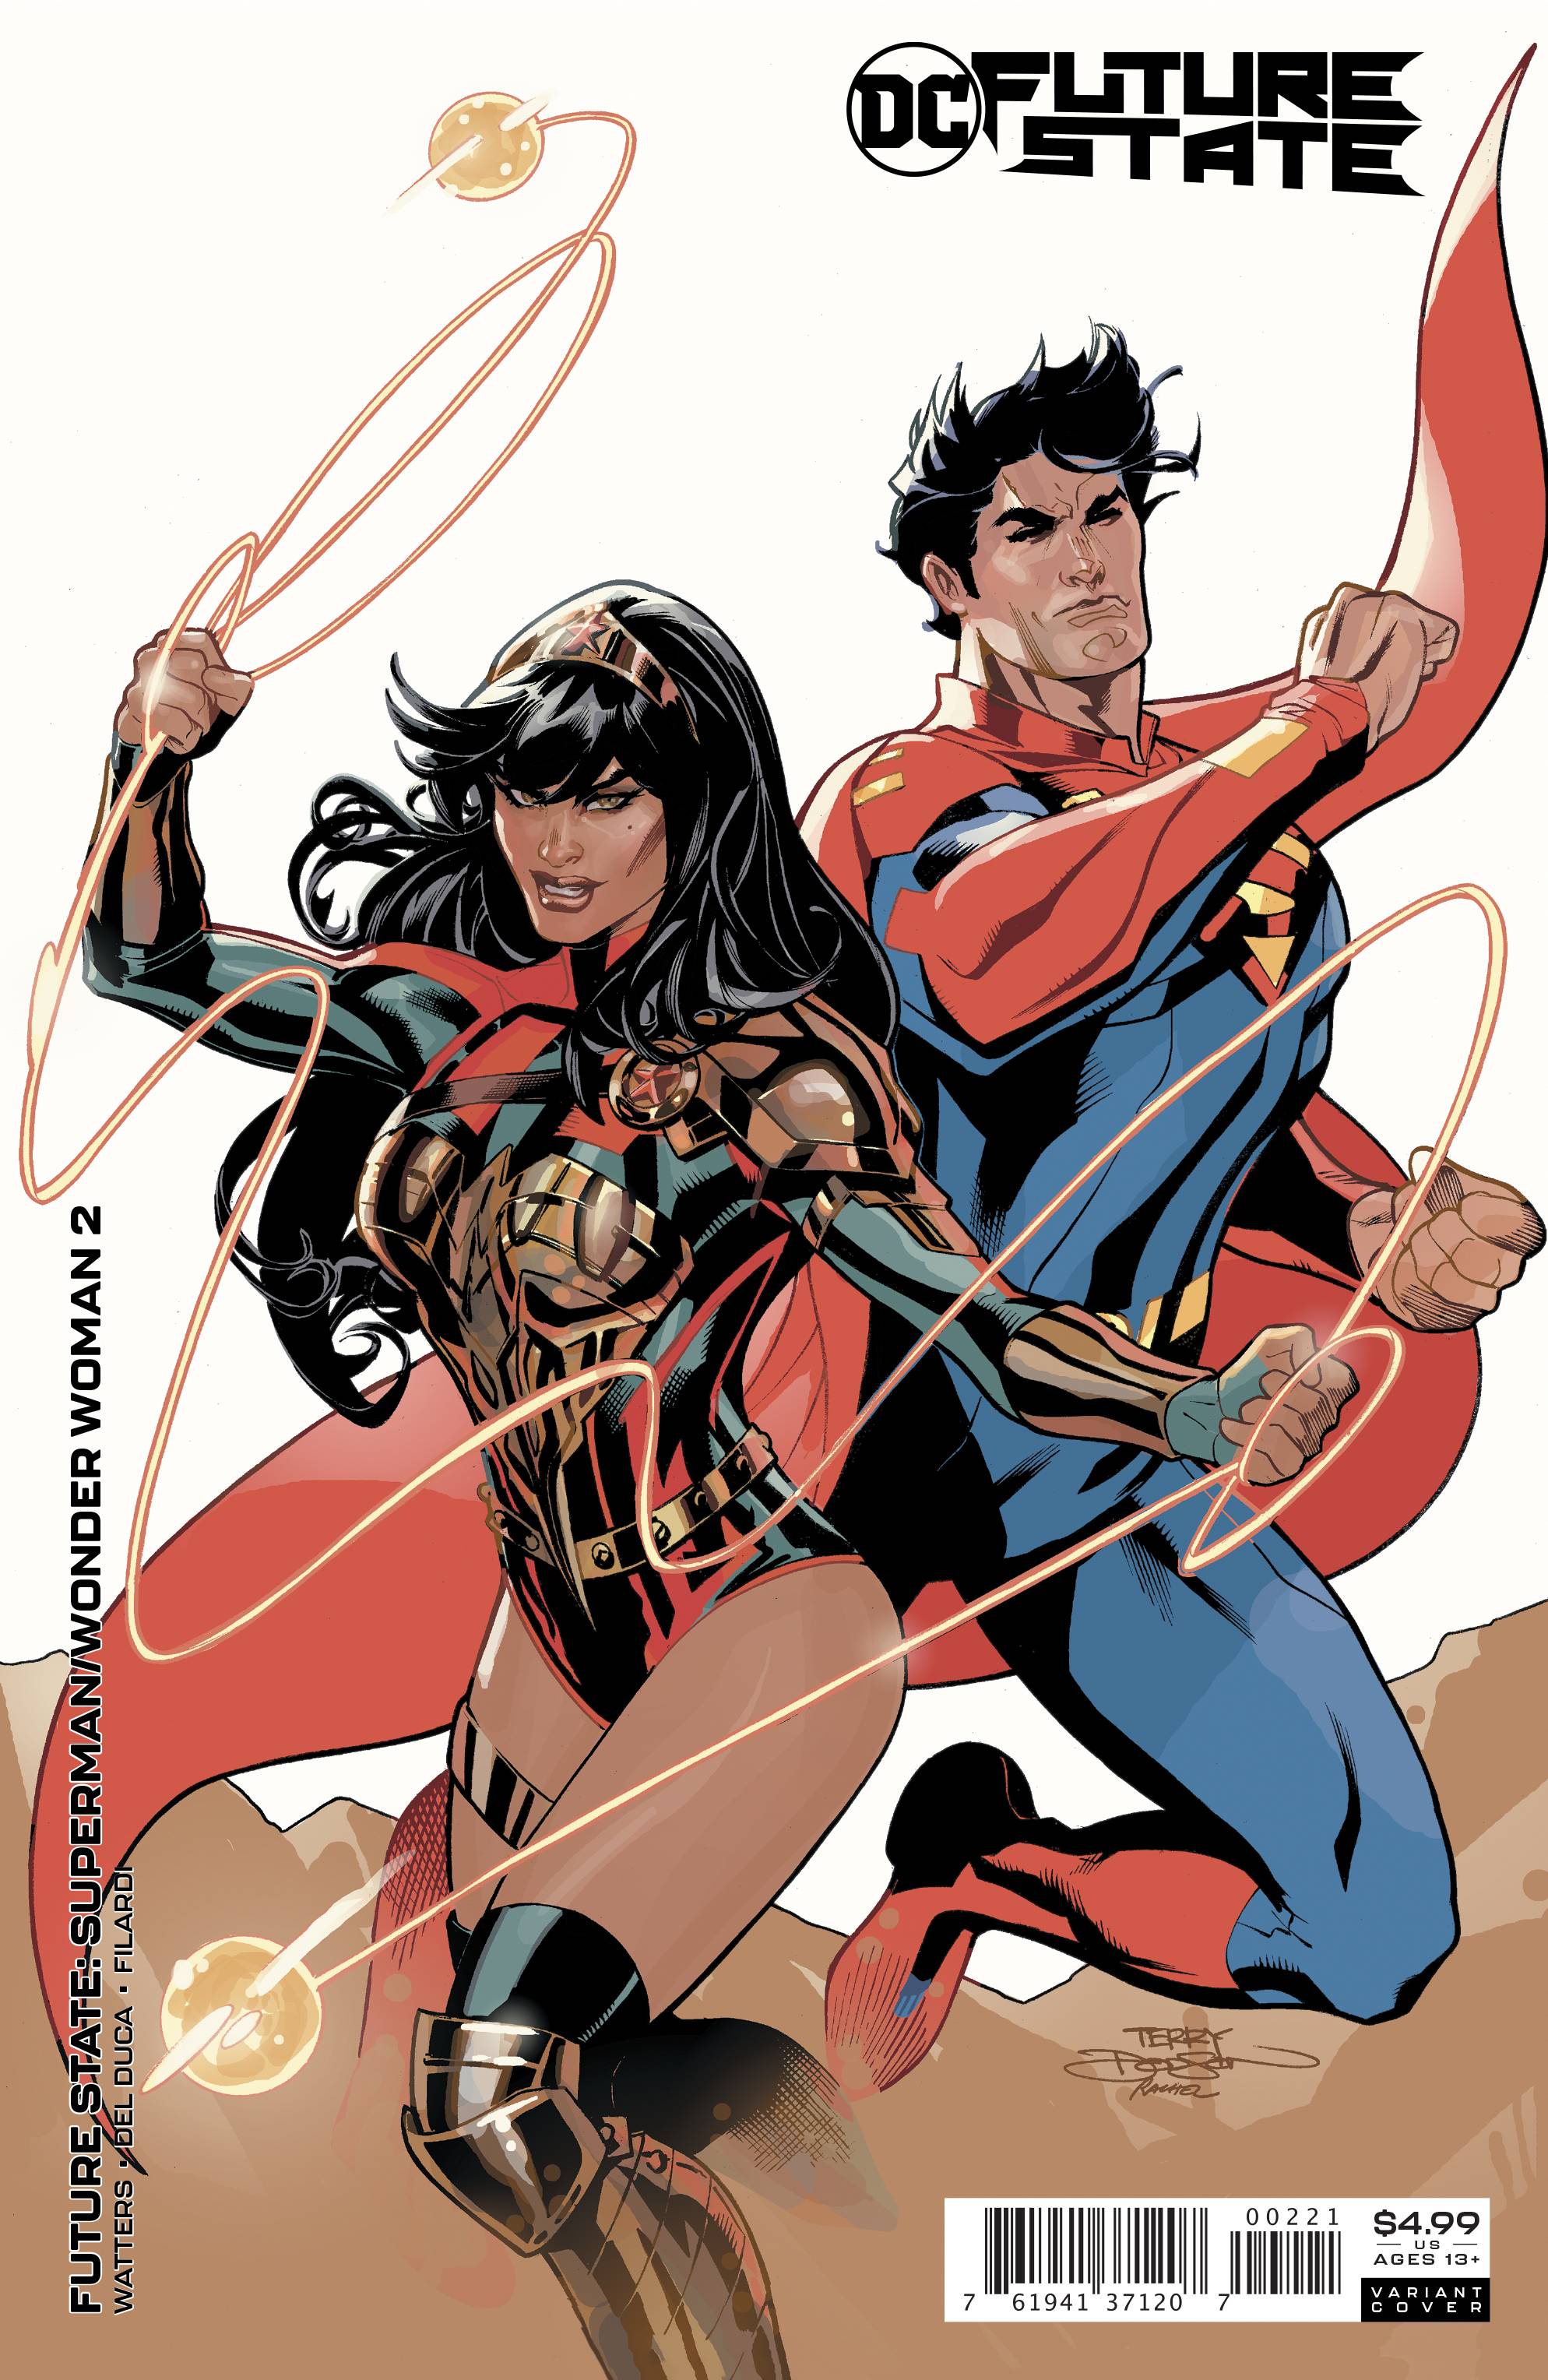 Wonder woman & superman